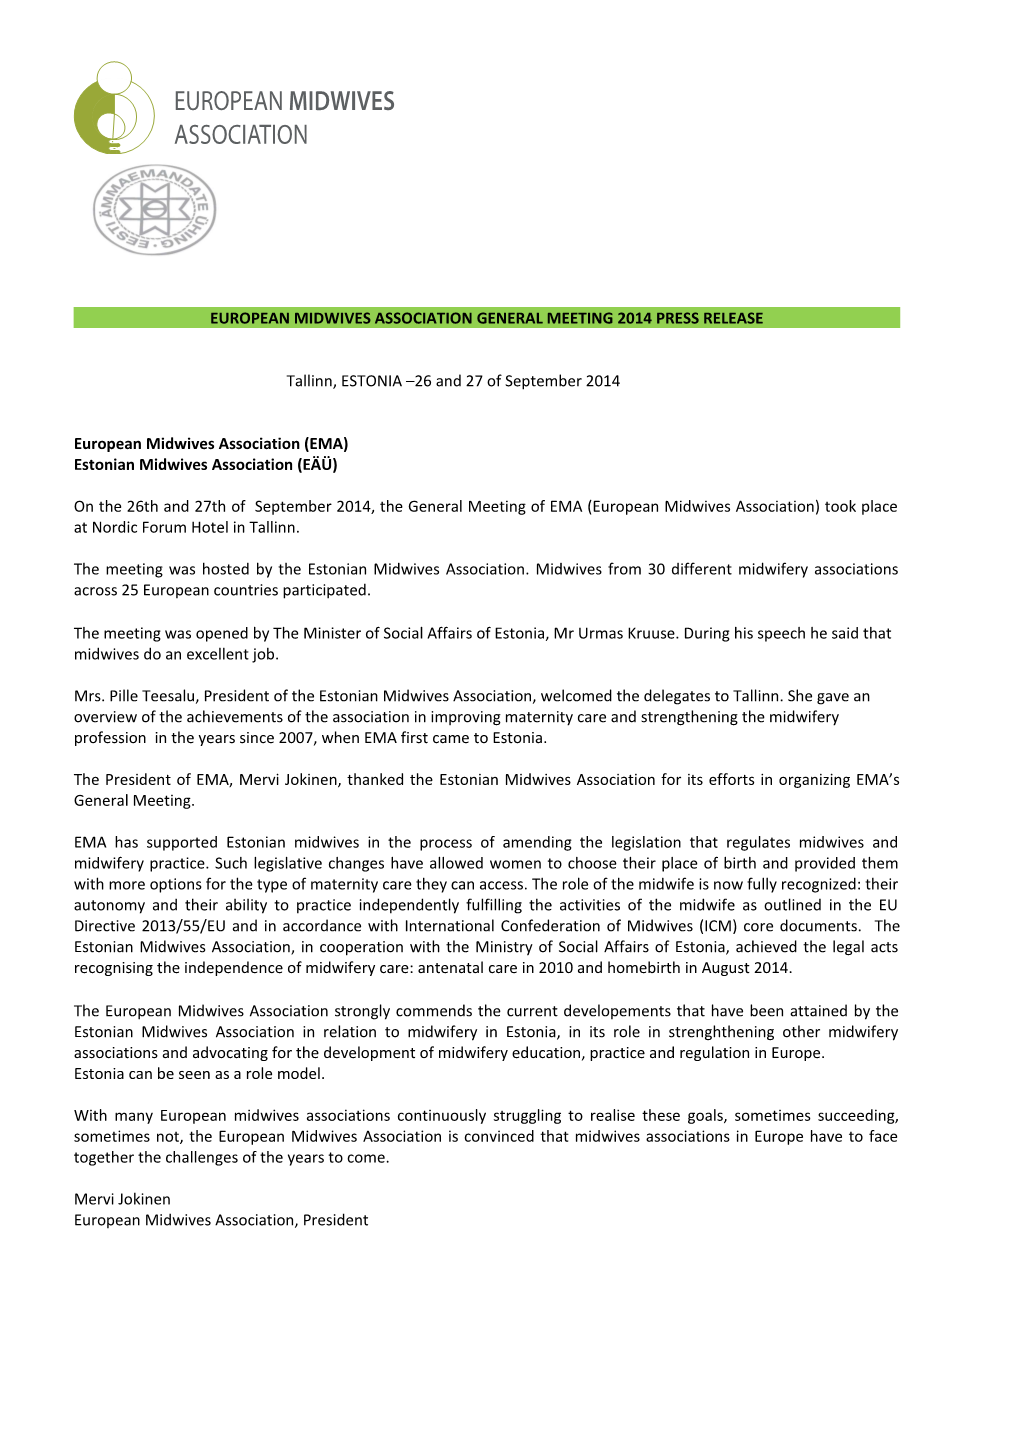 European Midwives Association General Meeting 2014 Press Release